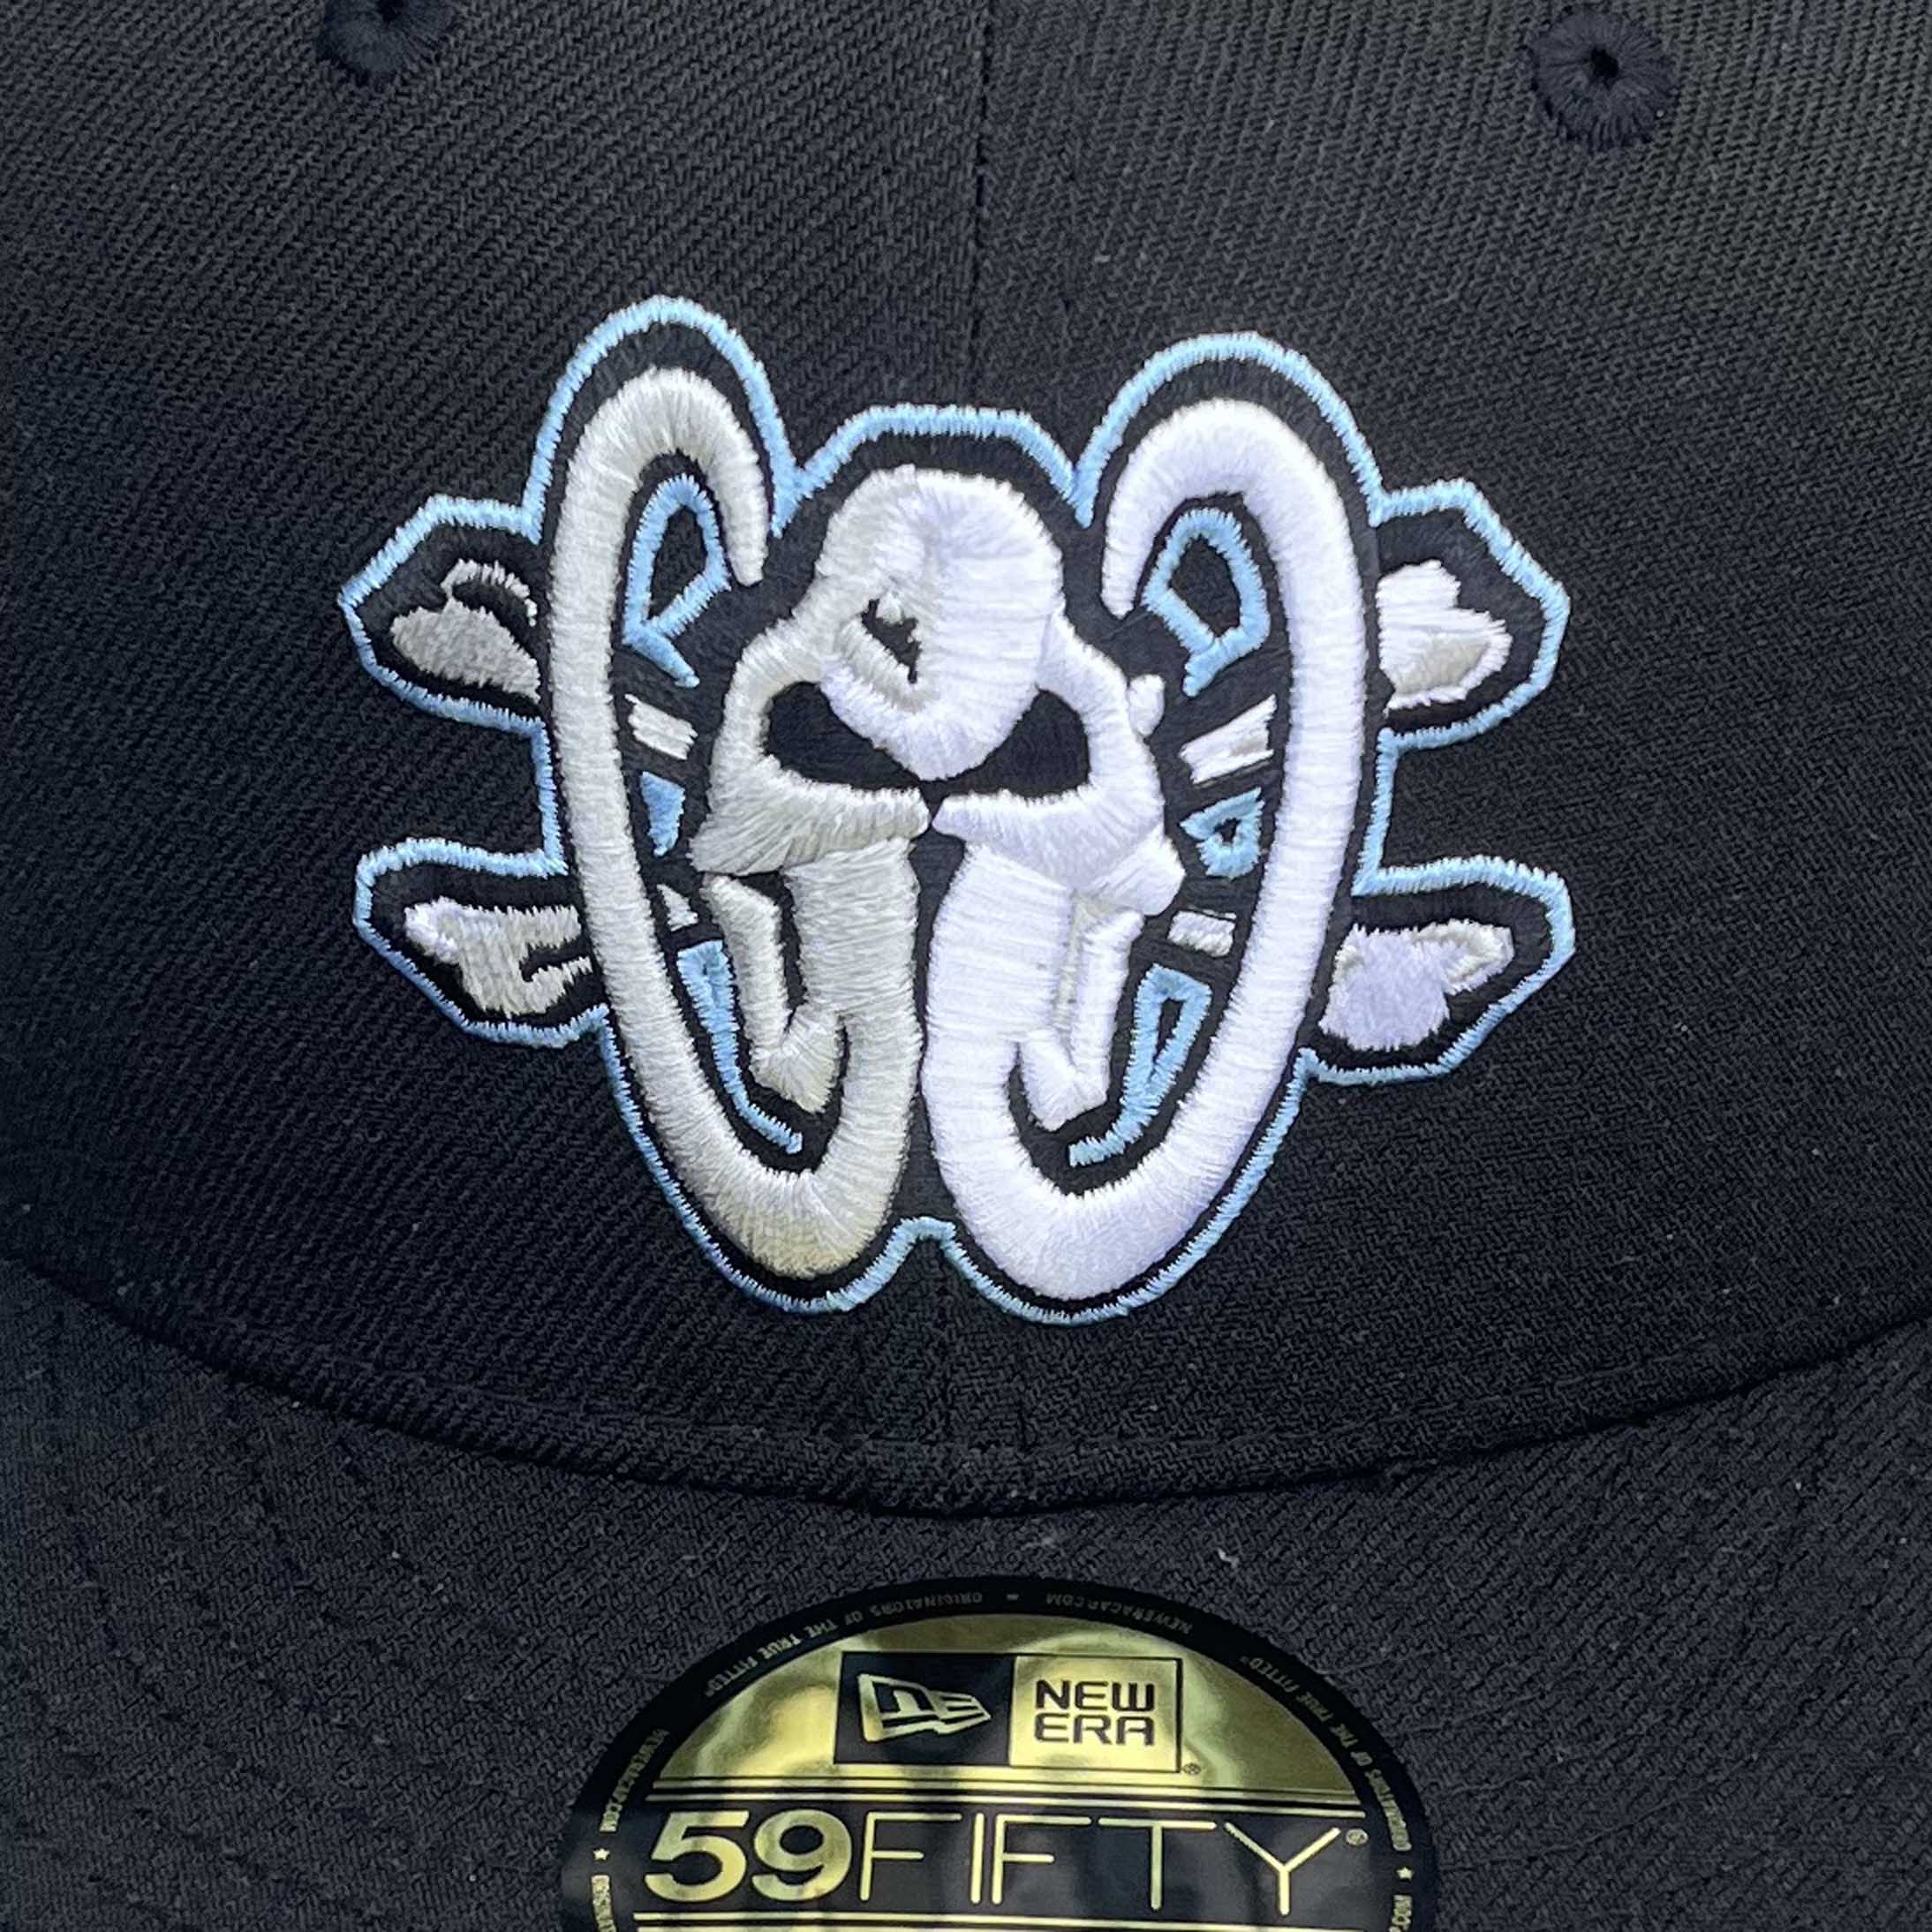 Woolly Mammoths New Era 59Fifty Bad to the Bone Hat - United Shore  Professional Baseball League (USPBL)